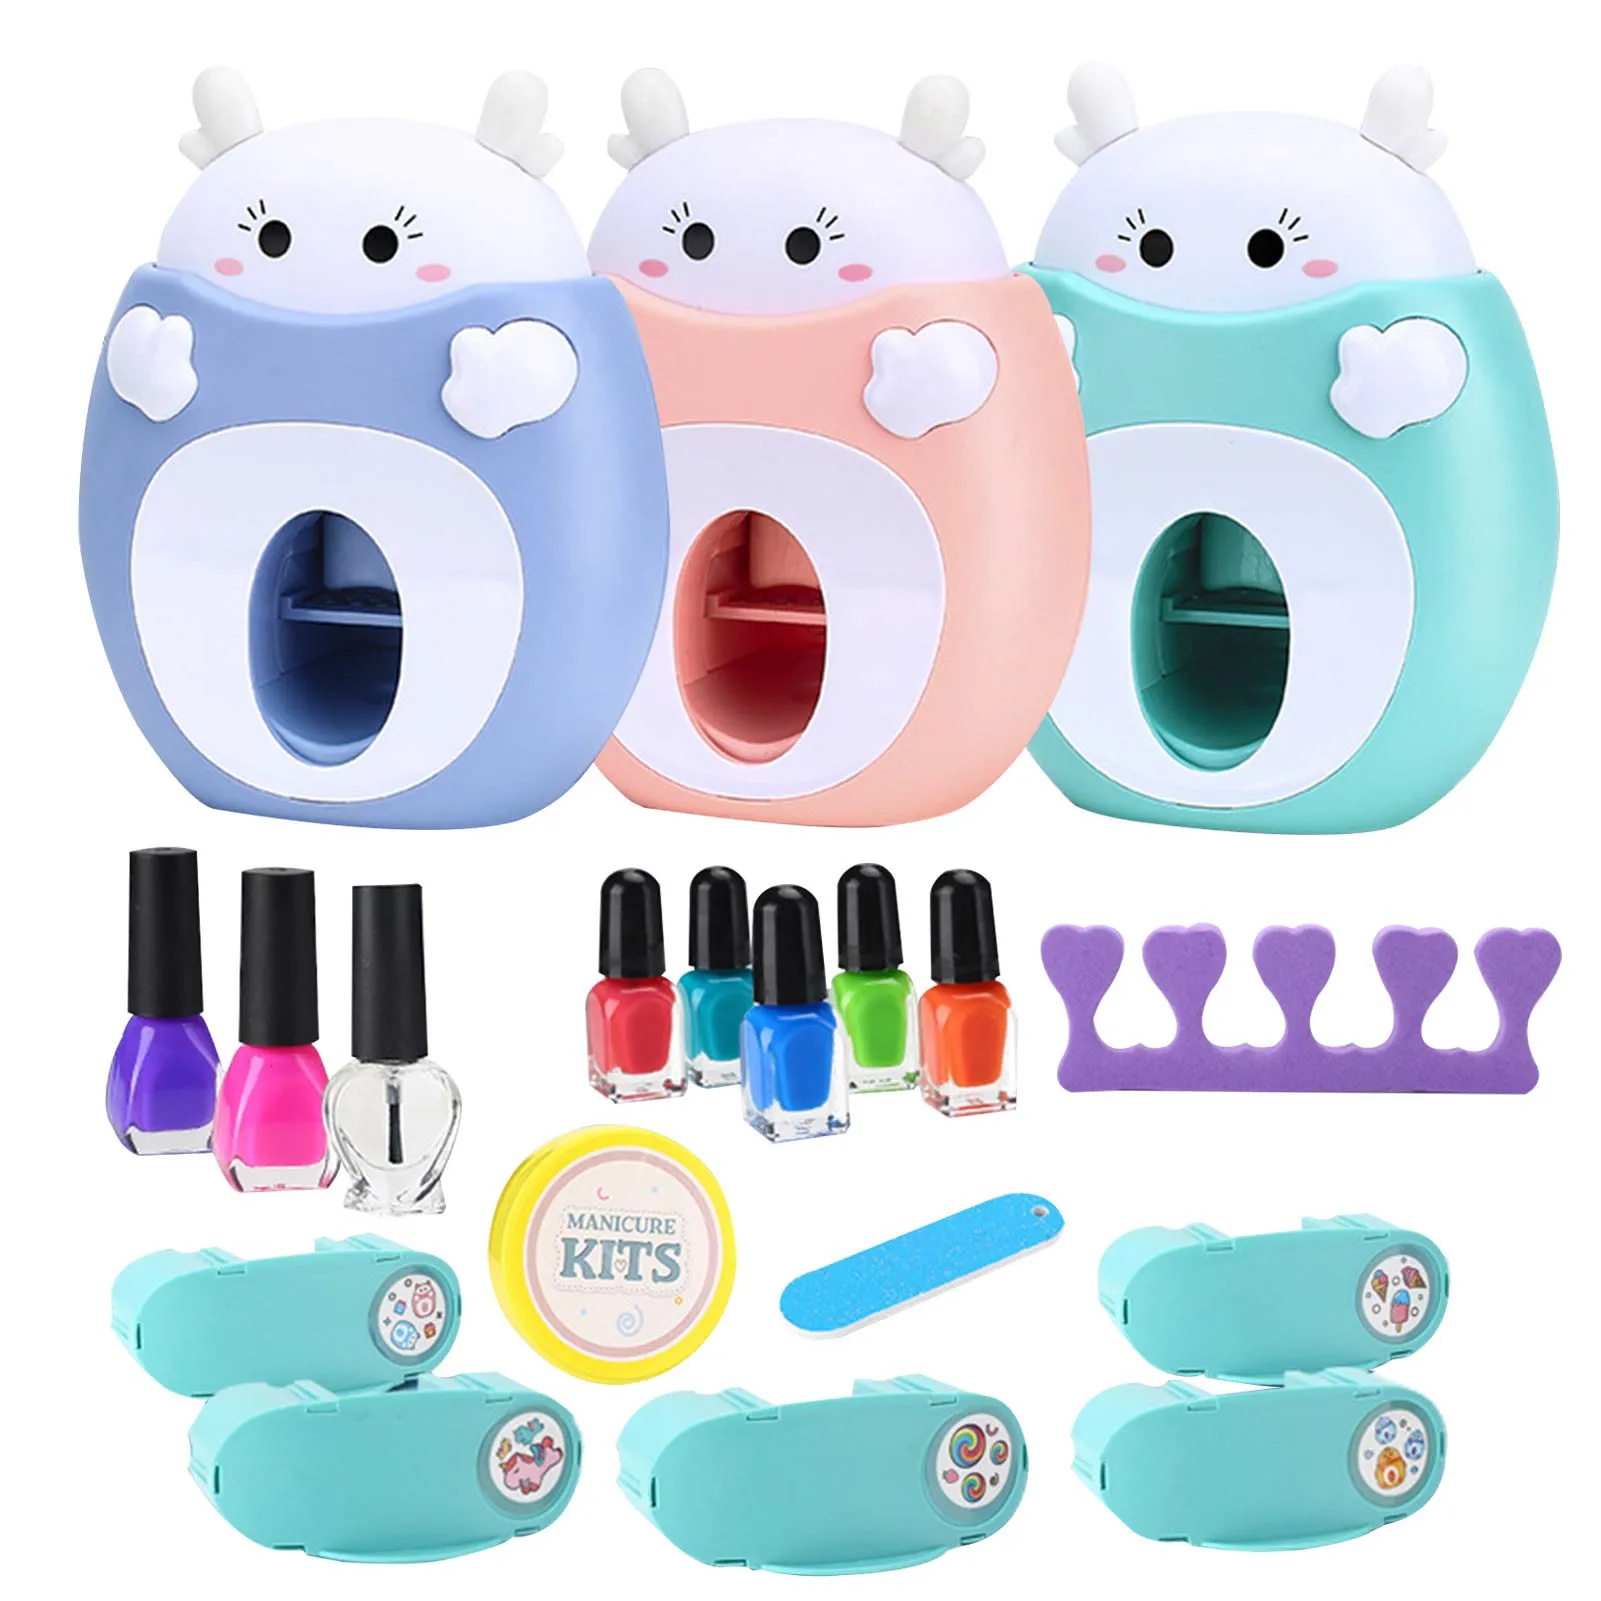 https://ae01.alicdn.com/kf/Hac528e8013f840bcb864e2b59b1fdf48U/17-Pcs-High-Quality-Kids-Nail-Art-Kit-Cute-Princess-Pretend-Play-Toys-Set-Nail-Stamper.jpg